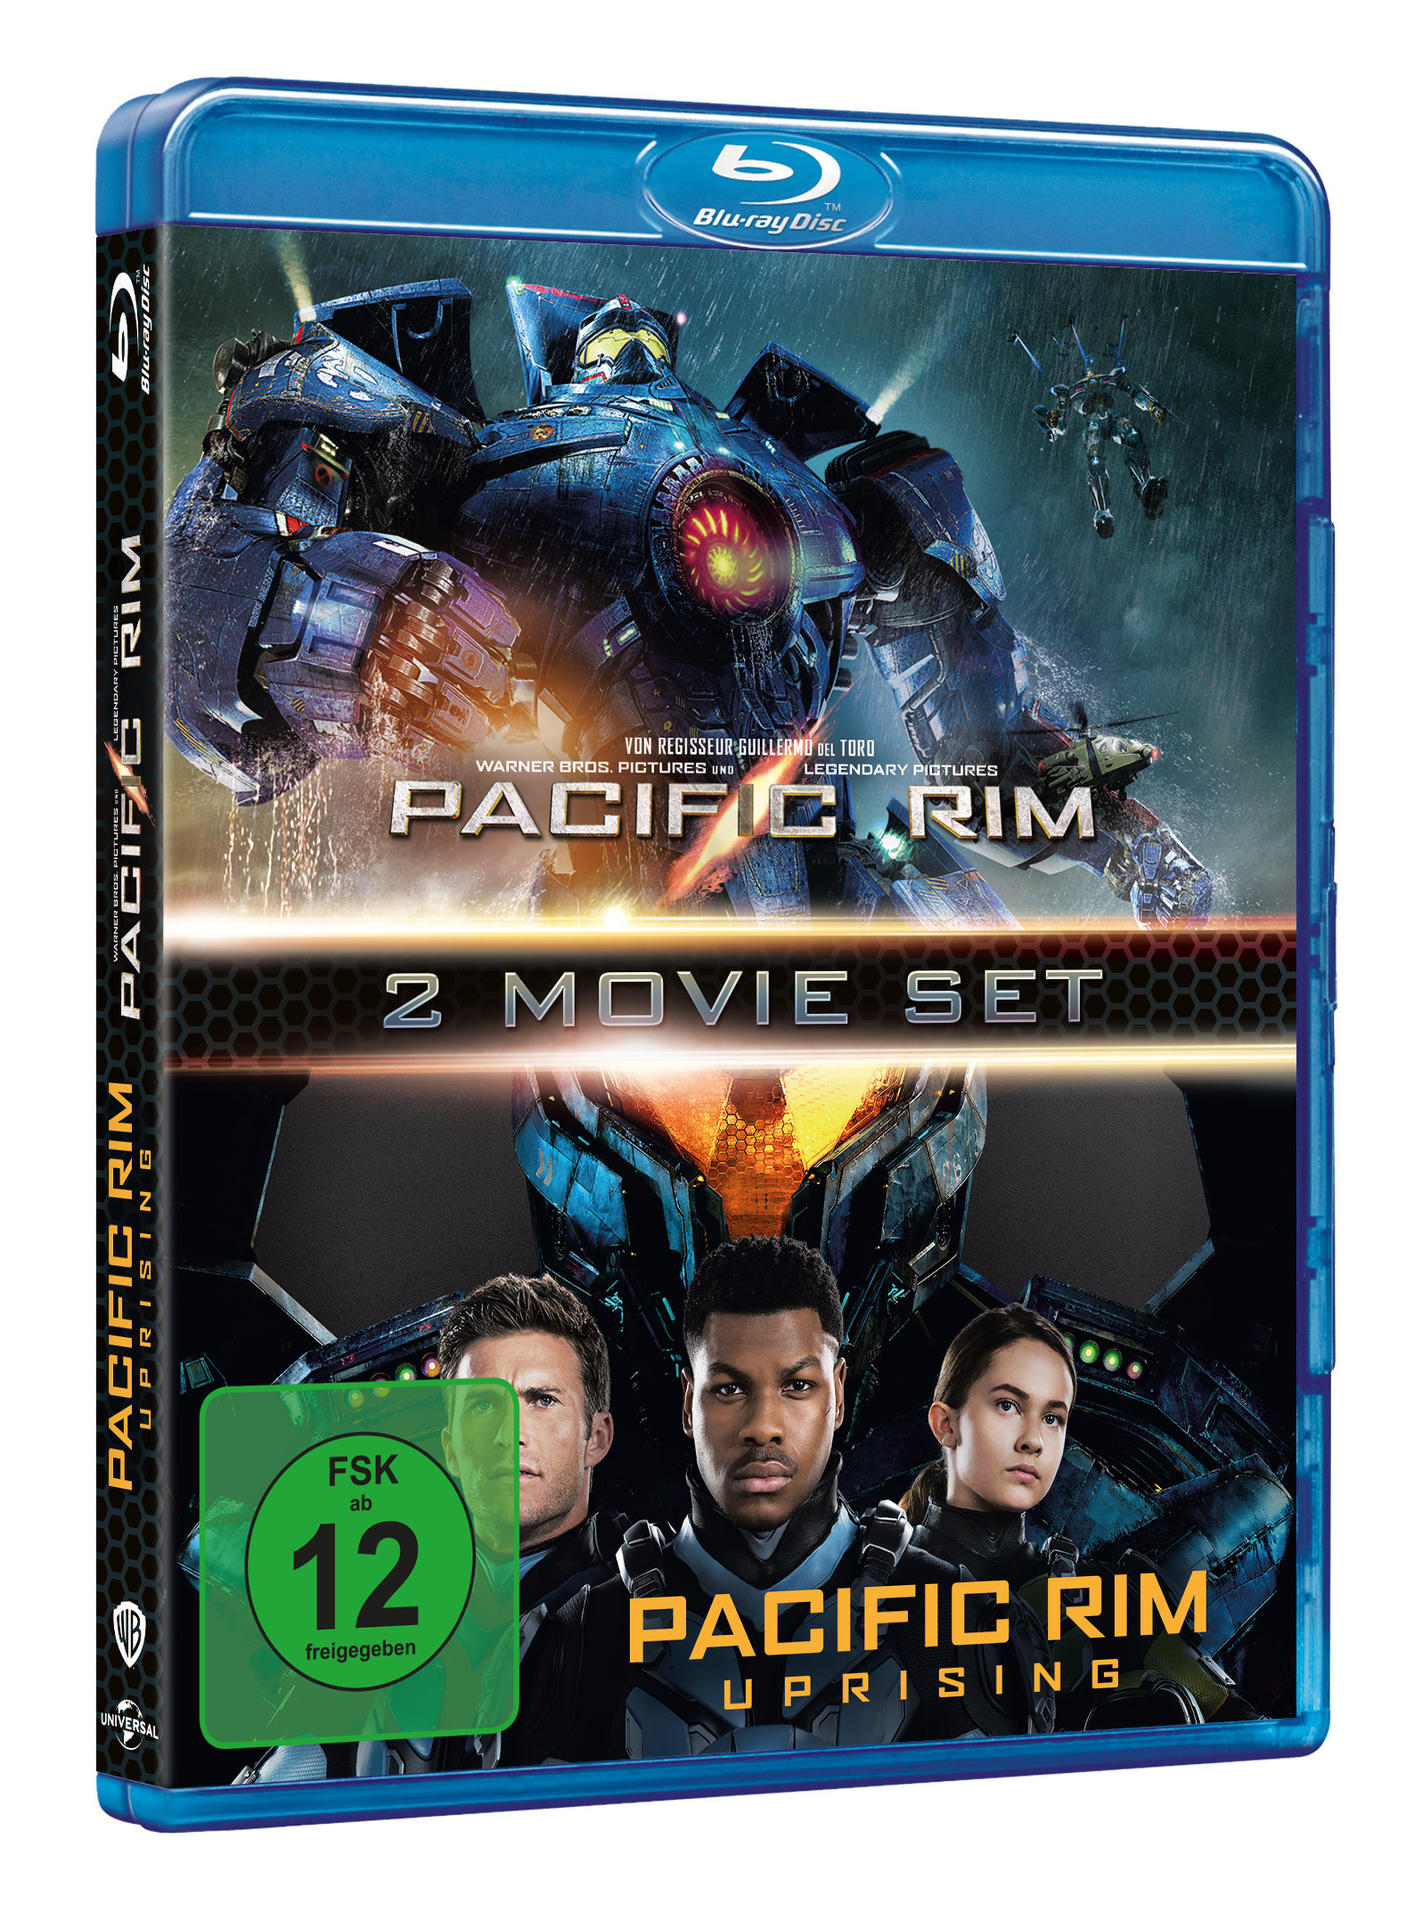 Blu-ray Rim Uprising Pacific & Rim: Pacific